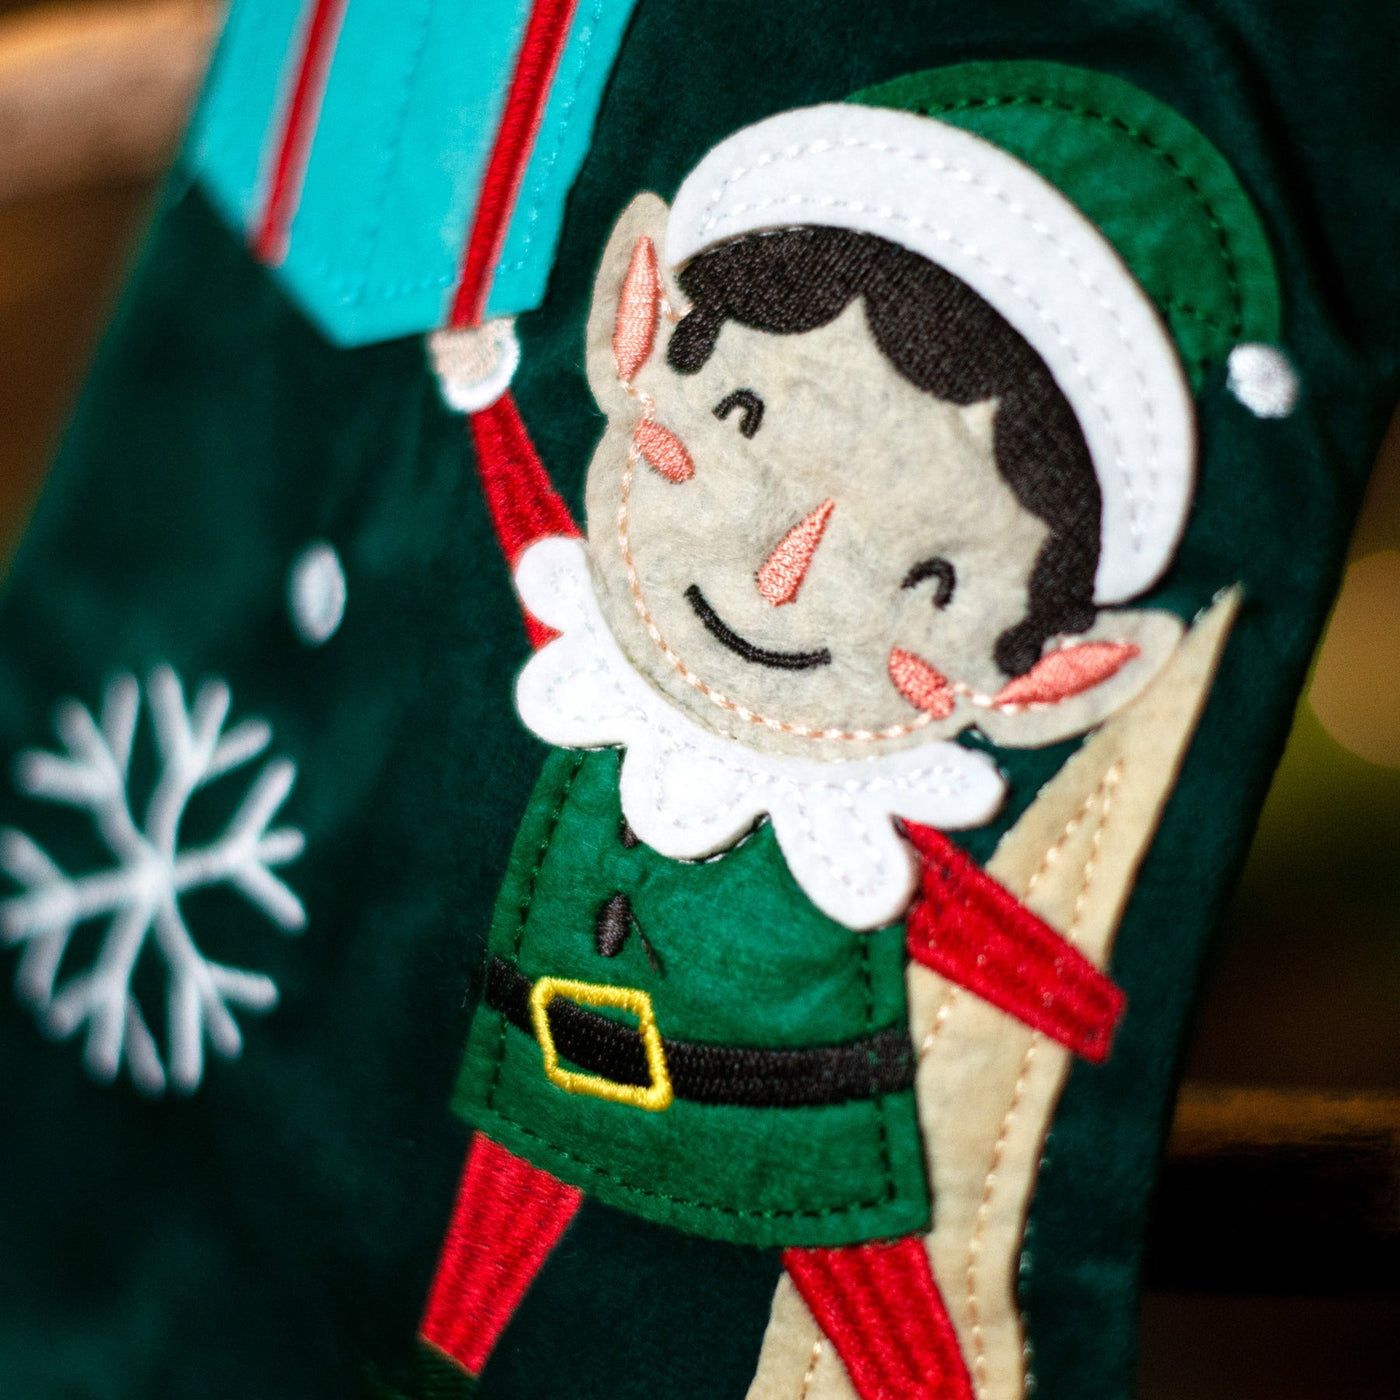 Elf Matching Family Christmas Stocking